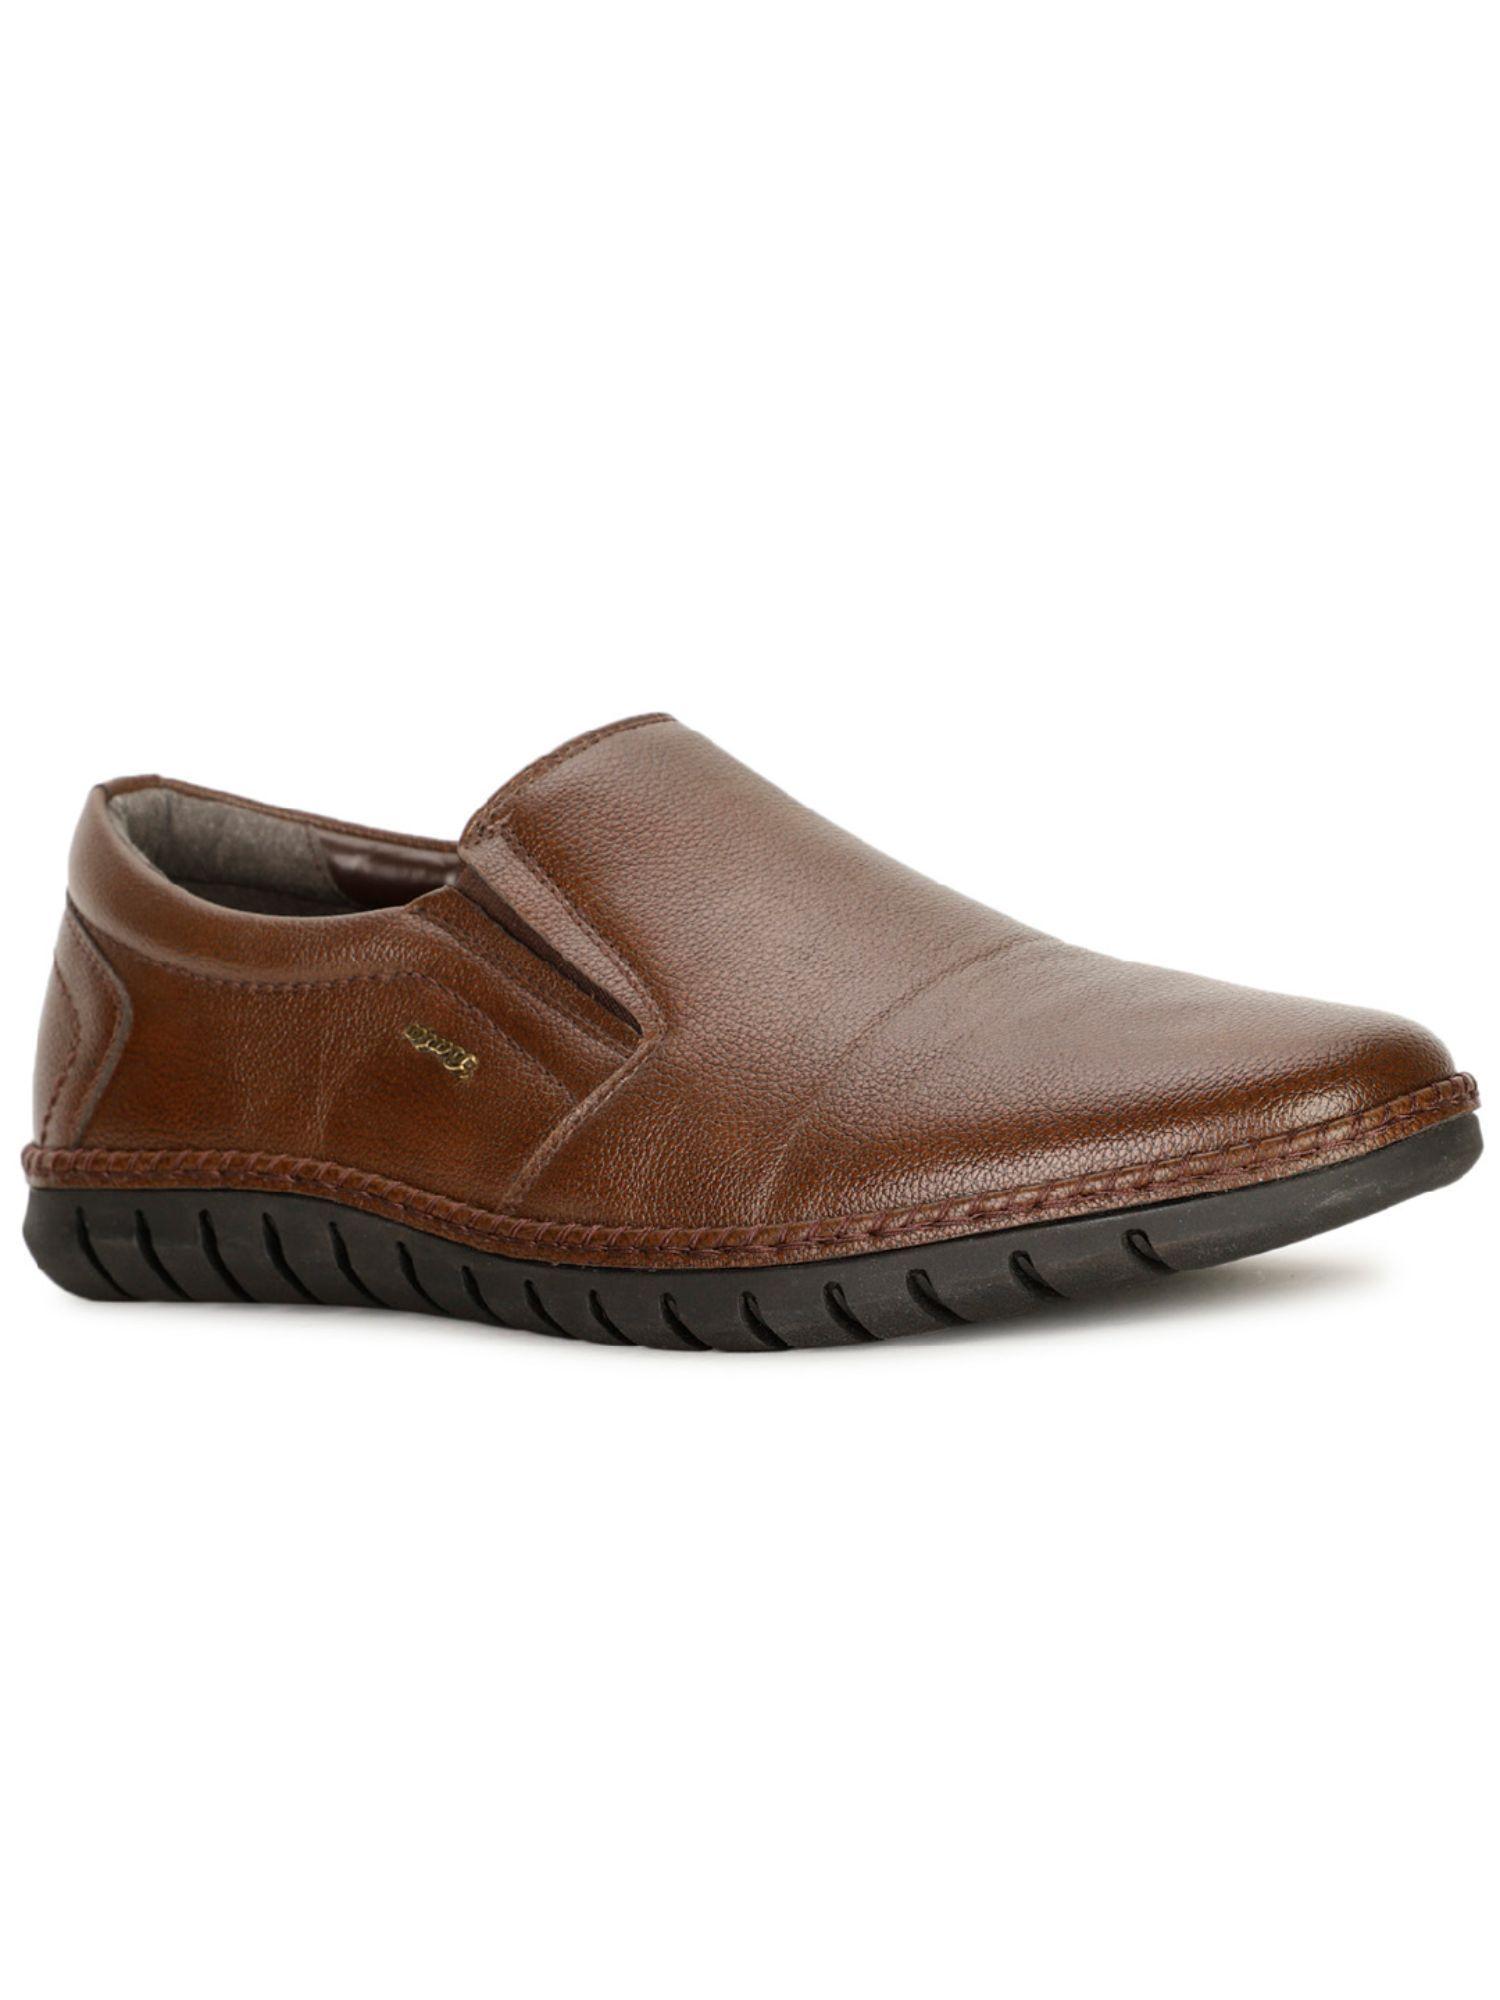 mens brown slip on formal loafers